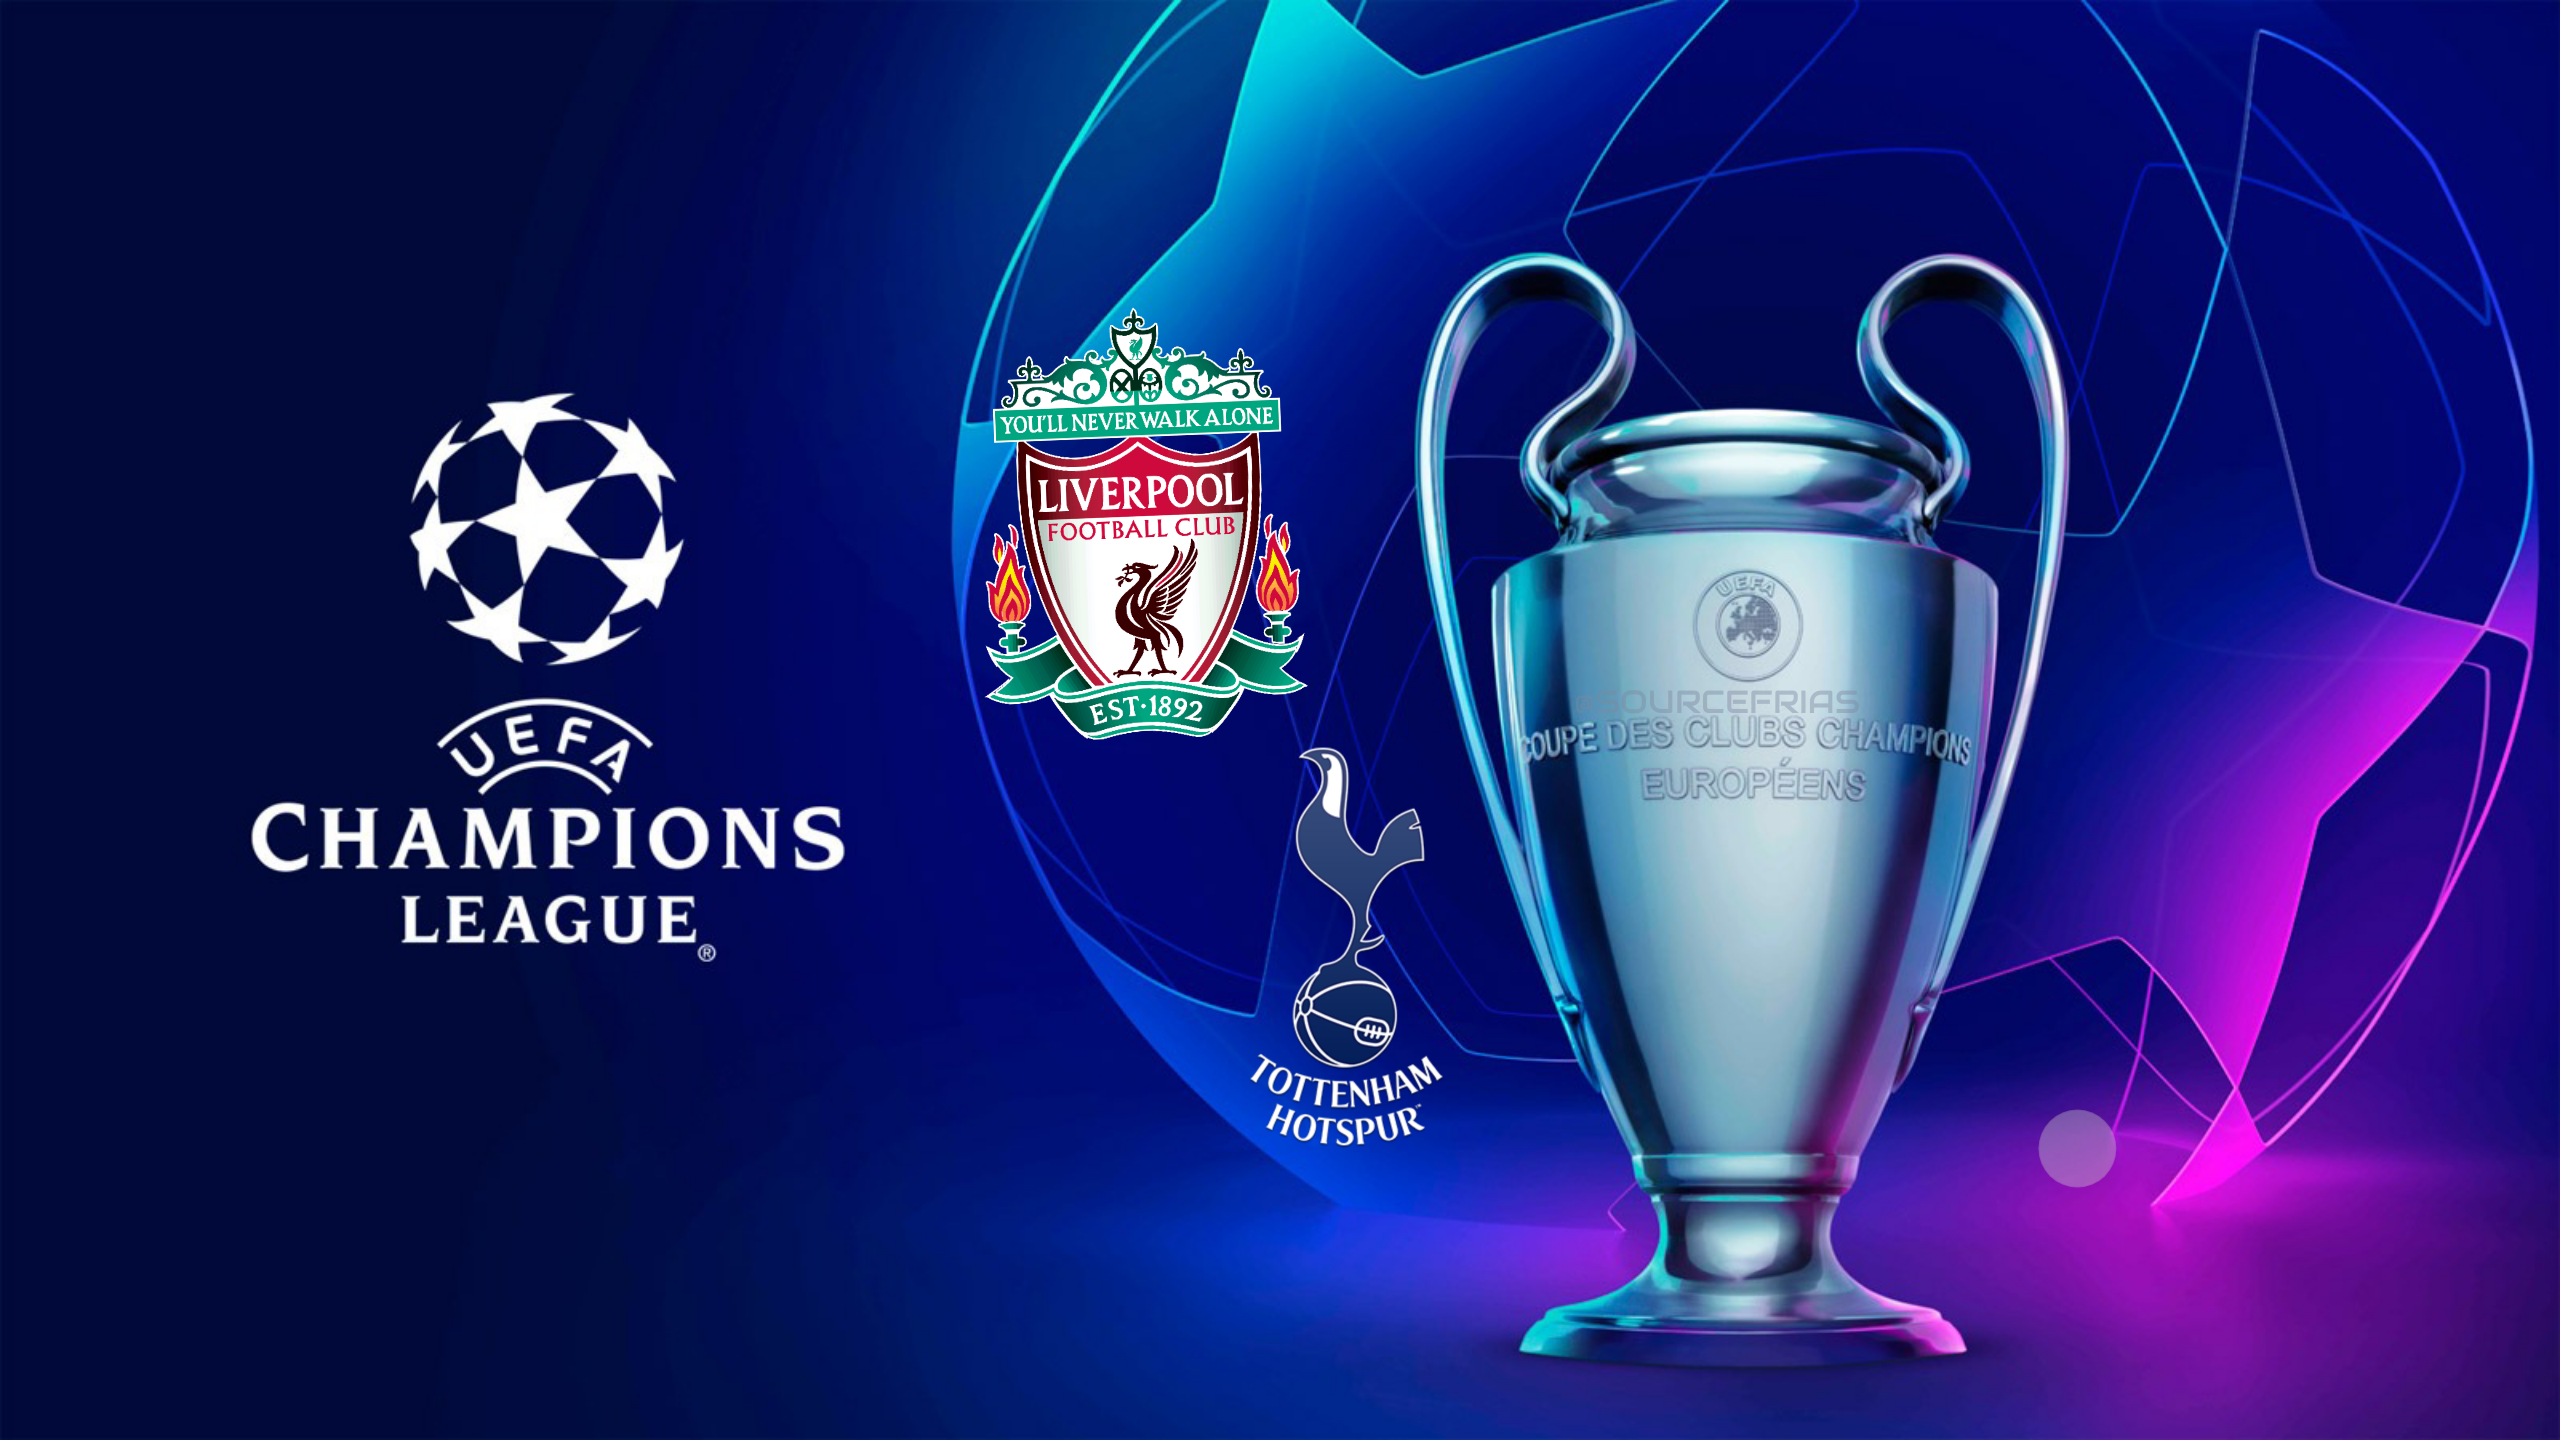 Liverpool Champions League Final 2019 Wallpaper